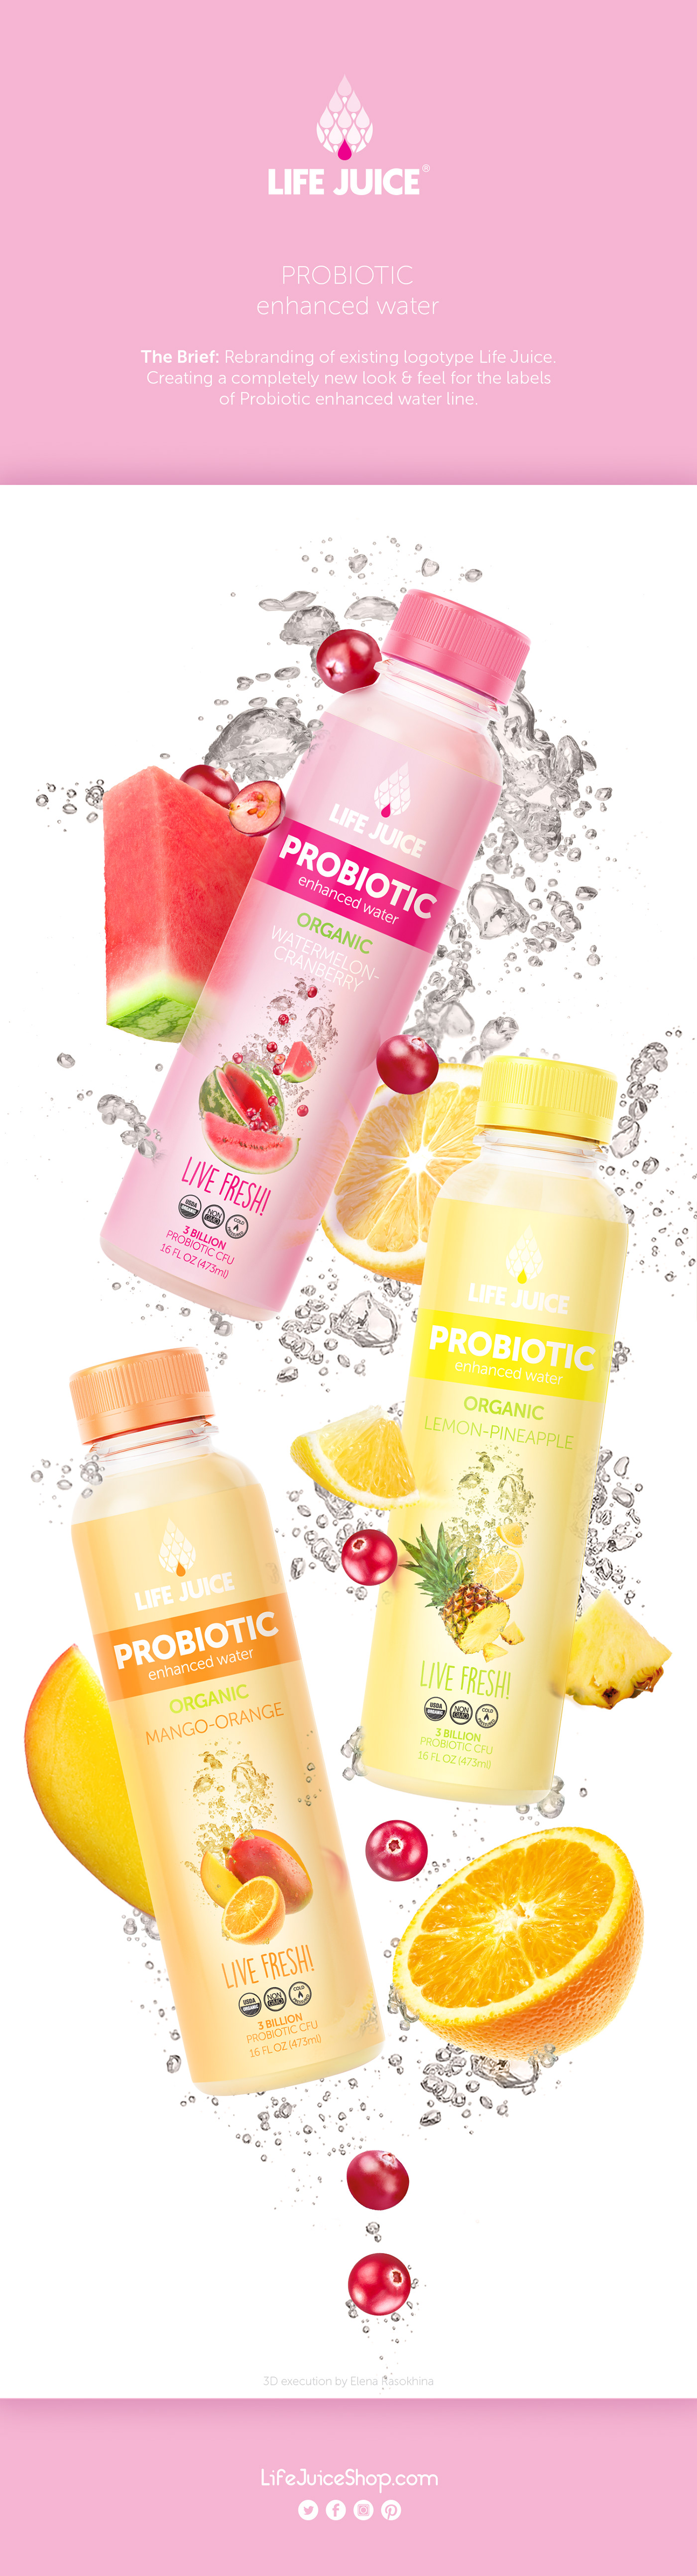 life juice water labels probiotic Packaging 3D probiotics